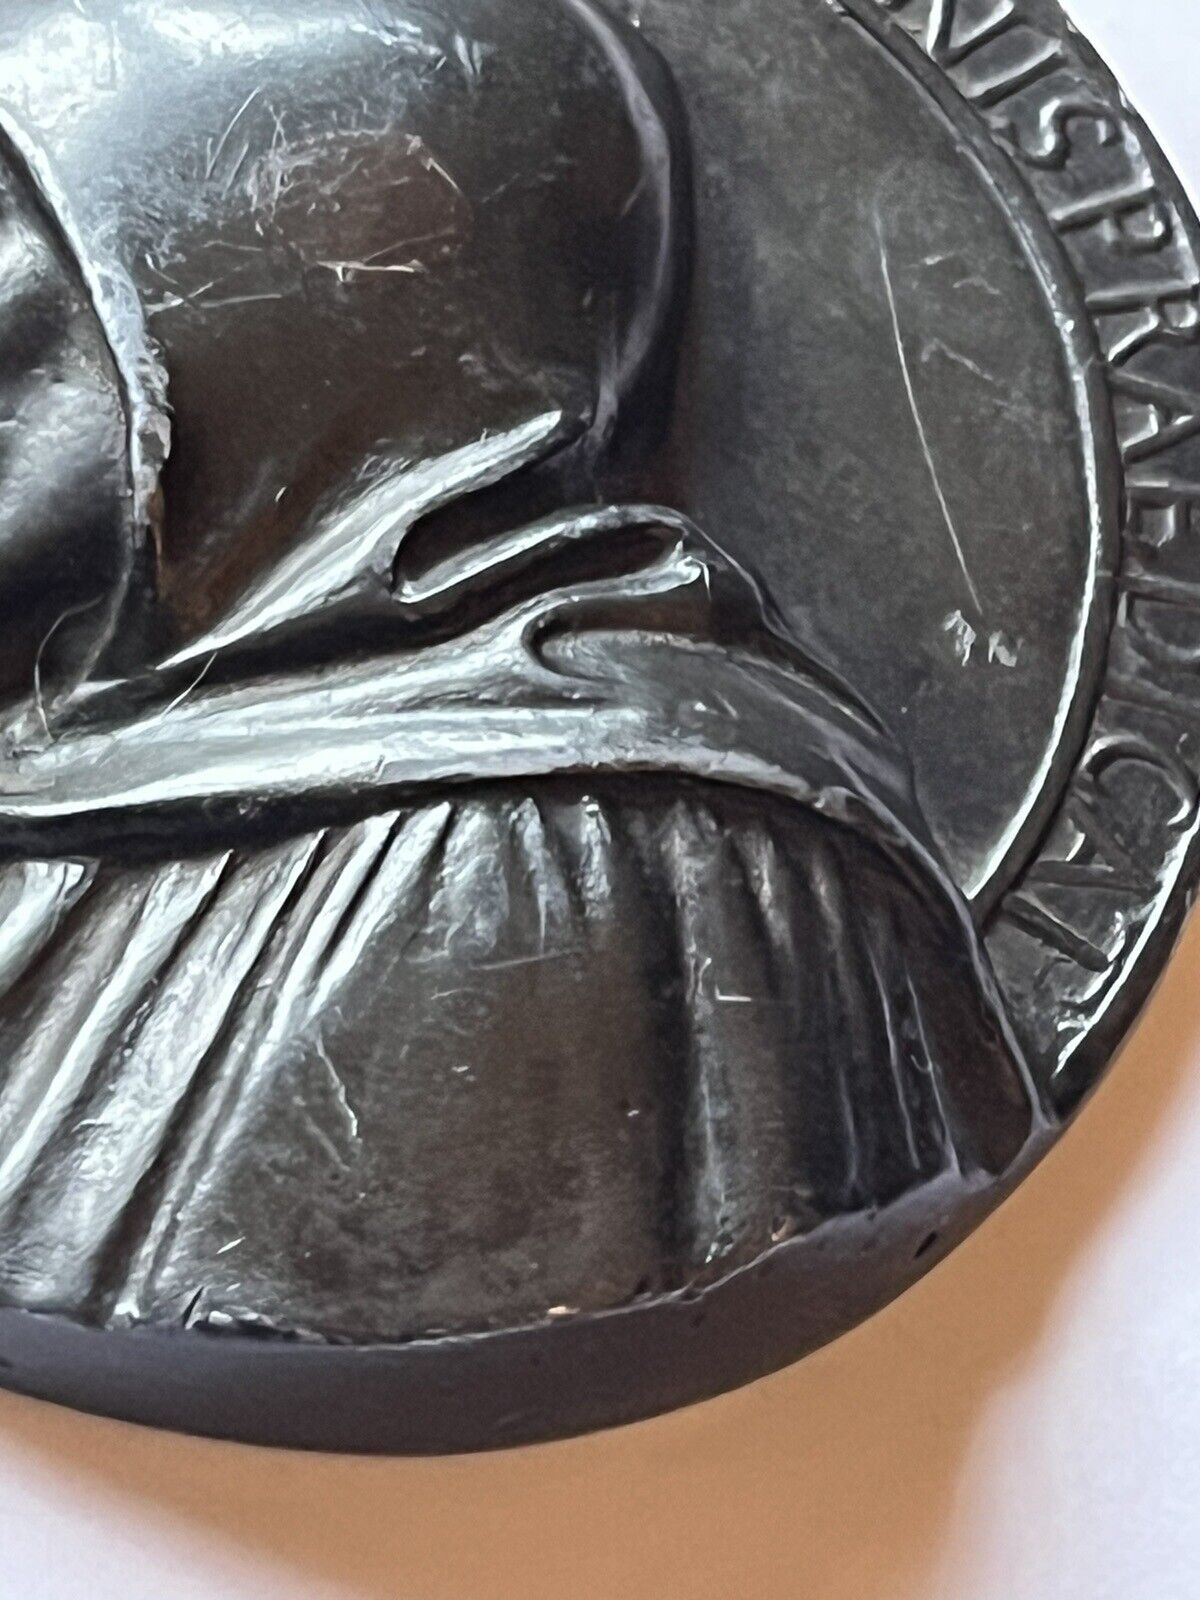 Girolamo Savonarola Medal 1453 , Medal of the preacher Girolamo Savonarola